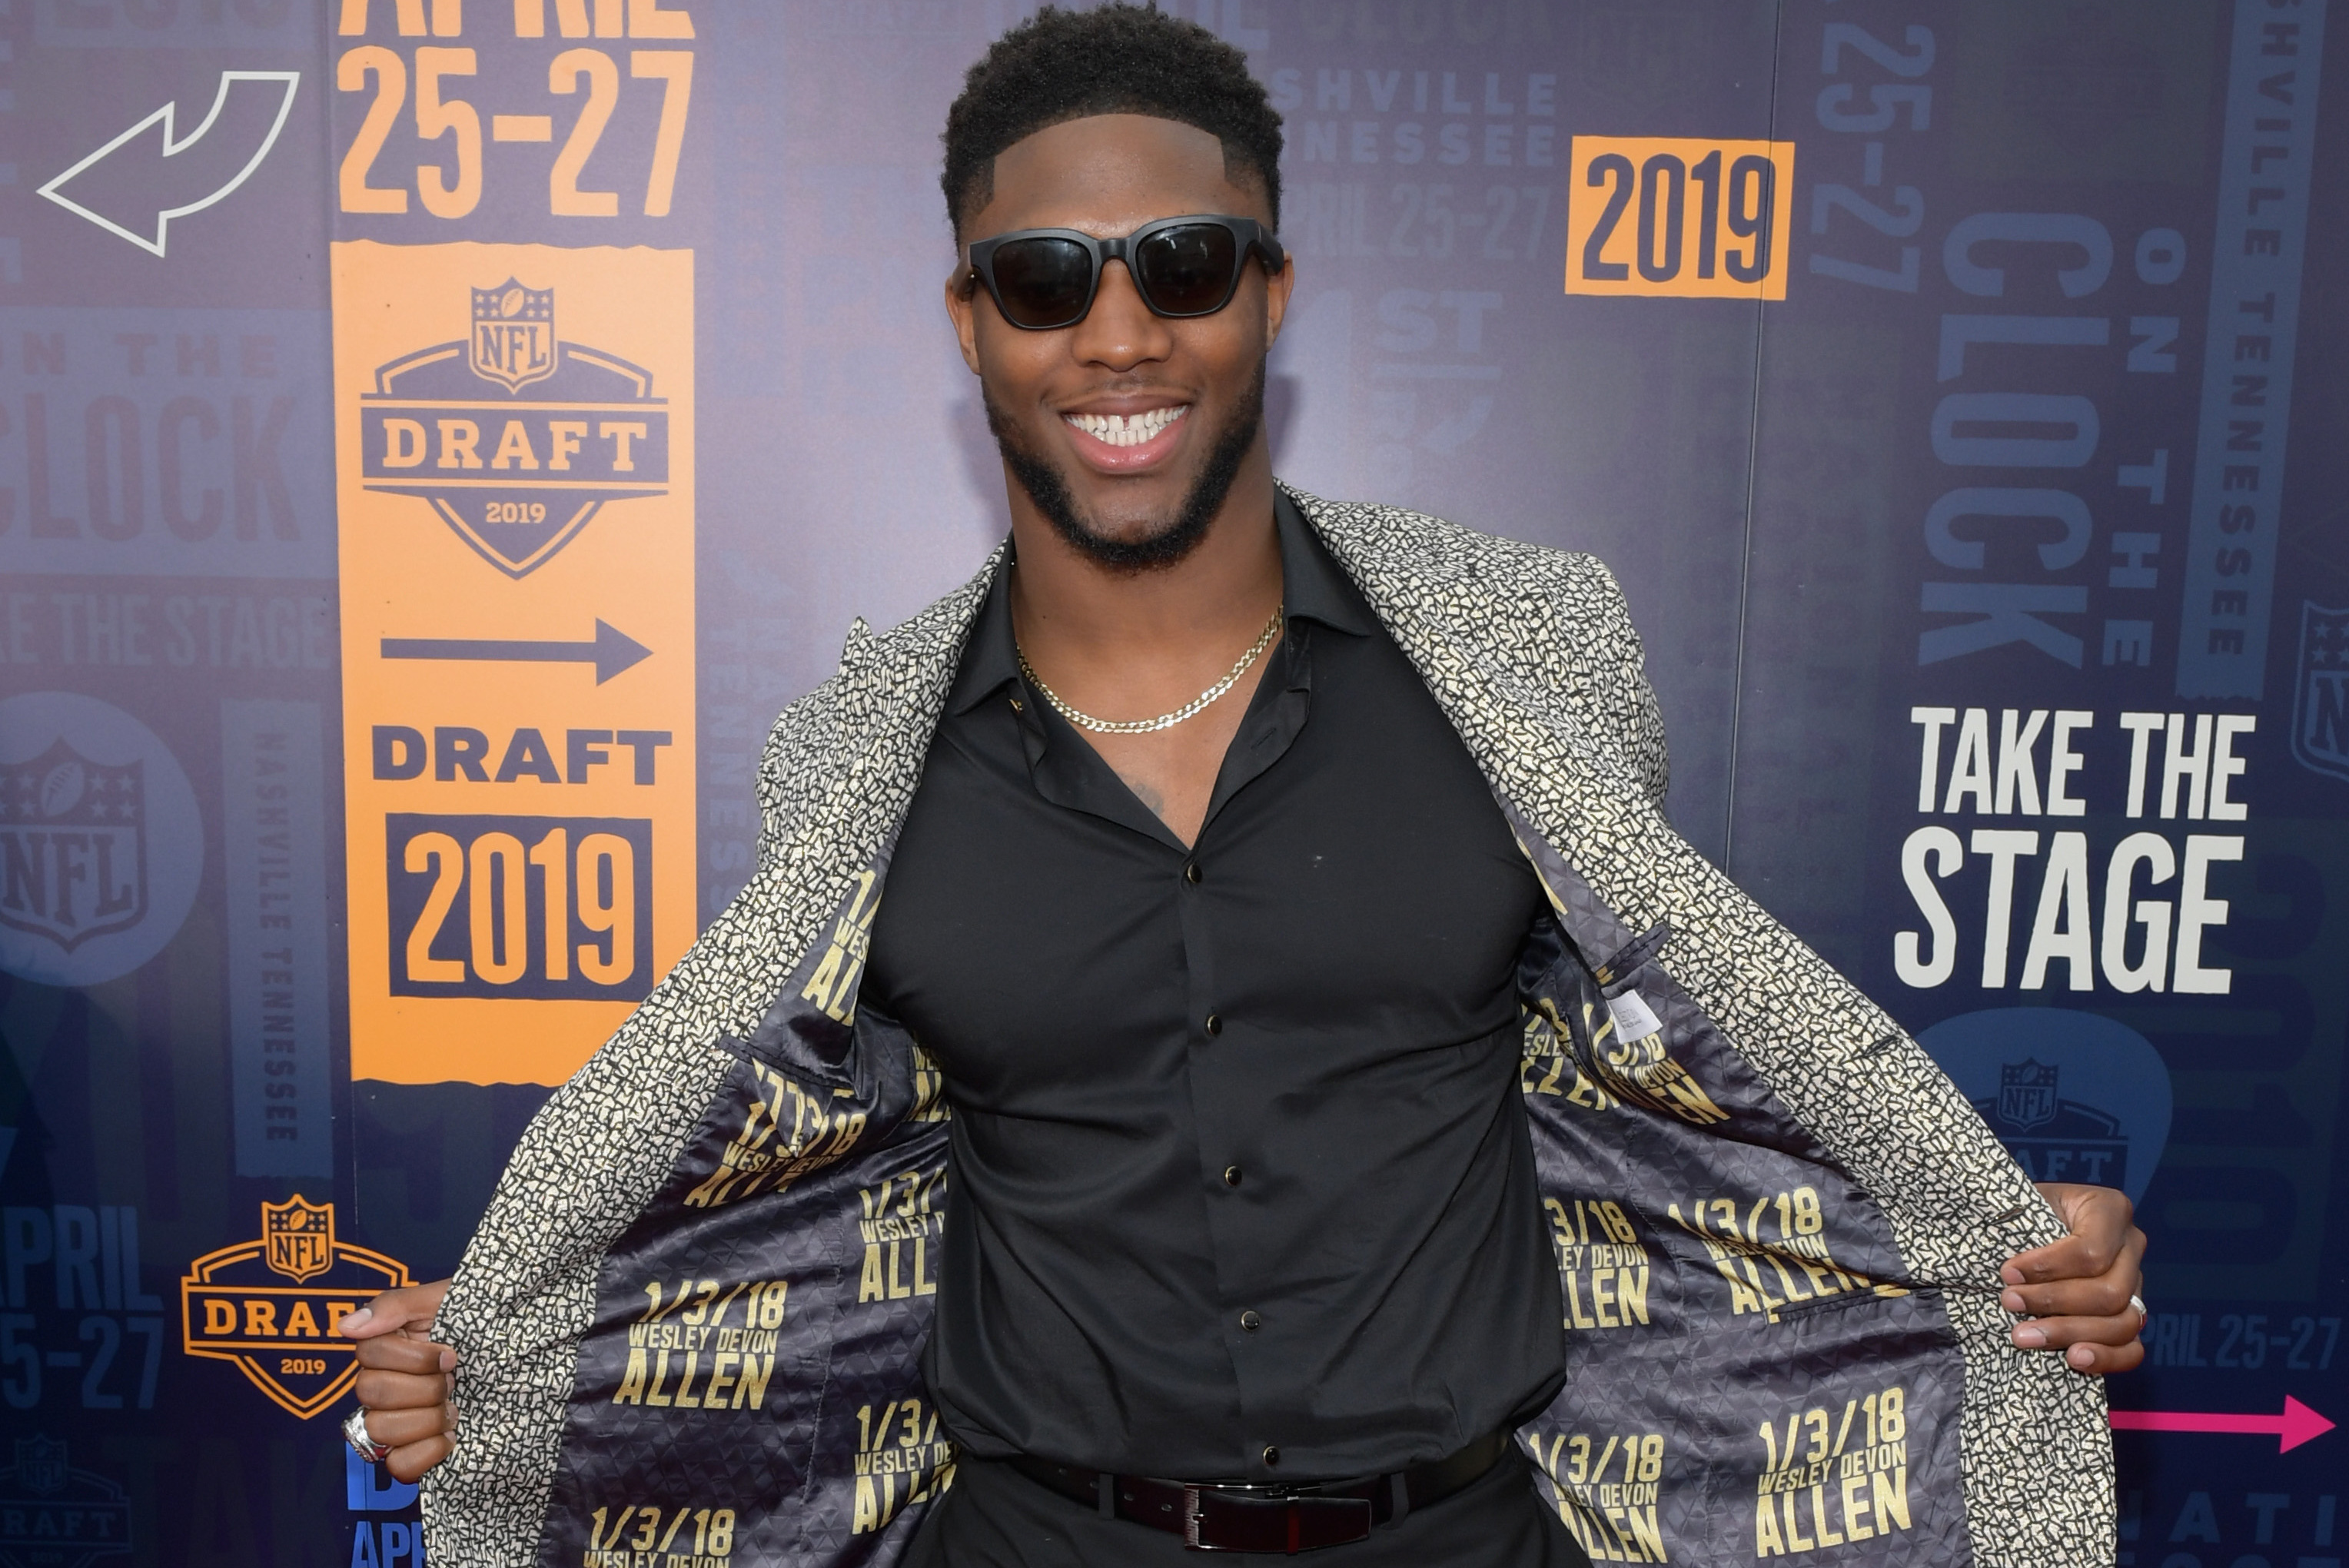 Jaguars Draft Josh Allen No. 7 in 2019 NFL Draft: 'Too Much Value